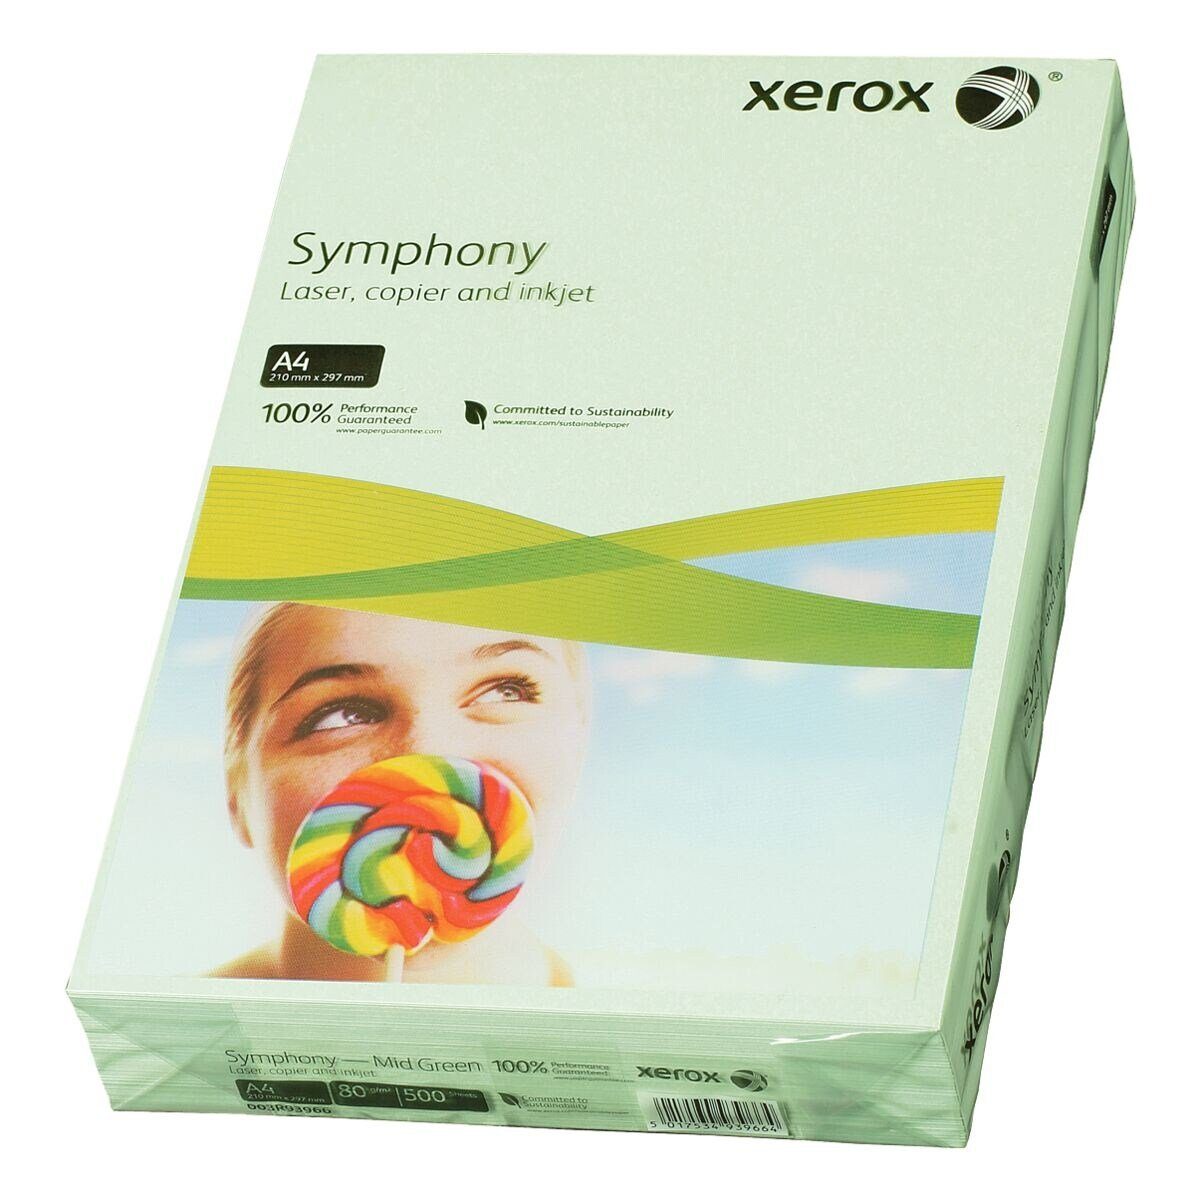 Kopierpapier Drucker- Format mittelgrün und 80 Blatt Trendfarben, DIN 500 Symphony, A4, g/m², Xerox